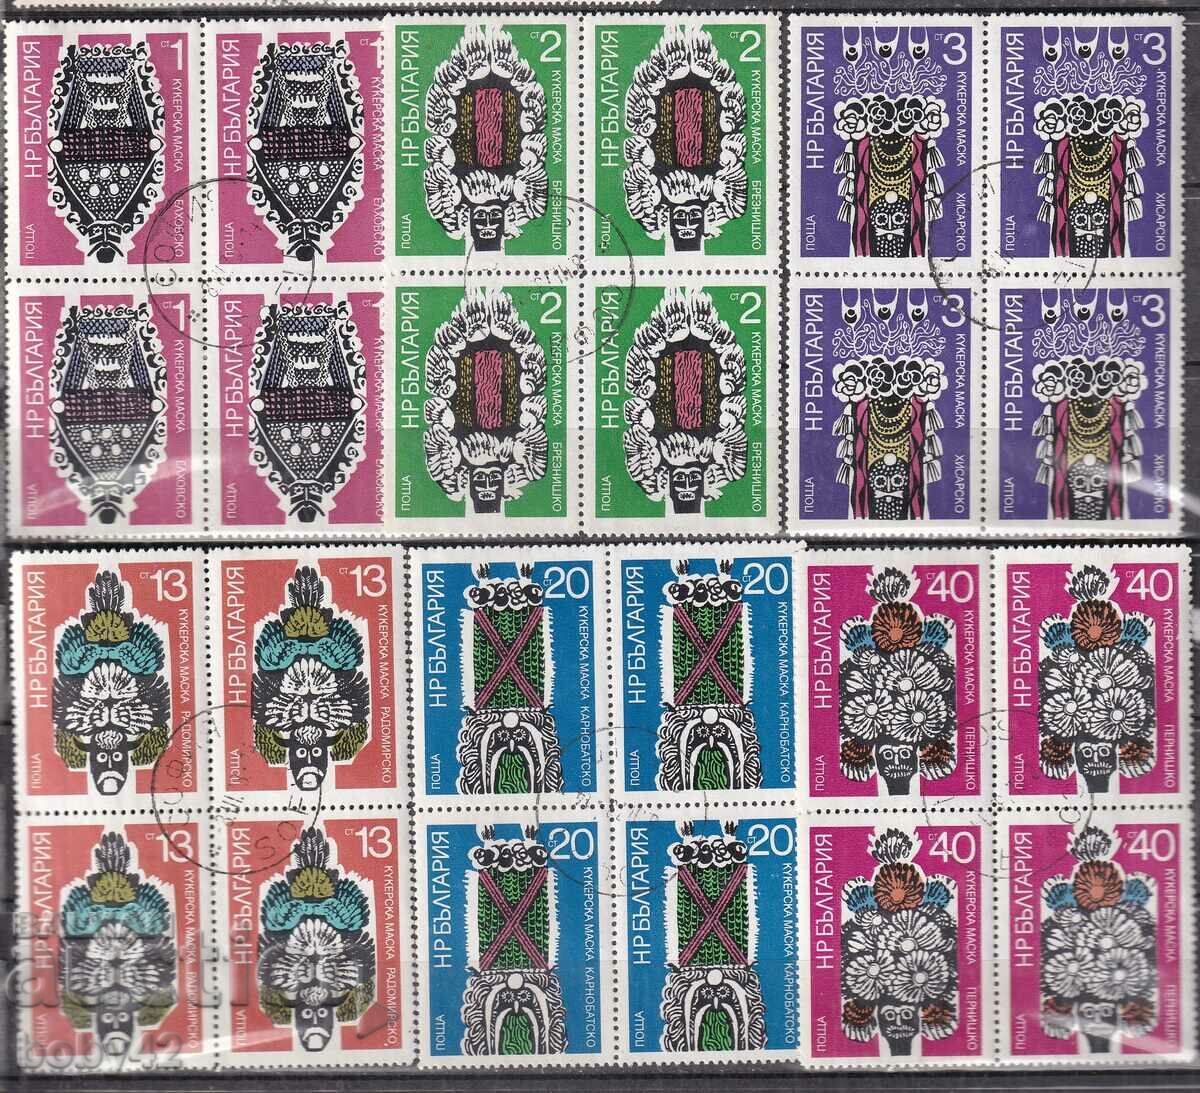 BK2292-2294 Μάσκες καλαμποκιού, μηχάνημα stamped - τετράγωνο